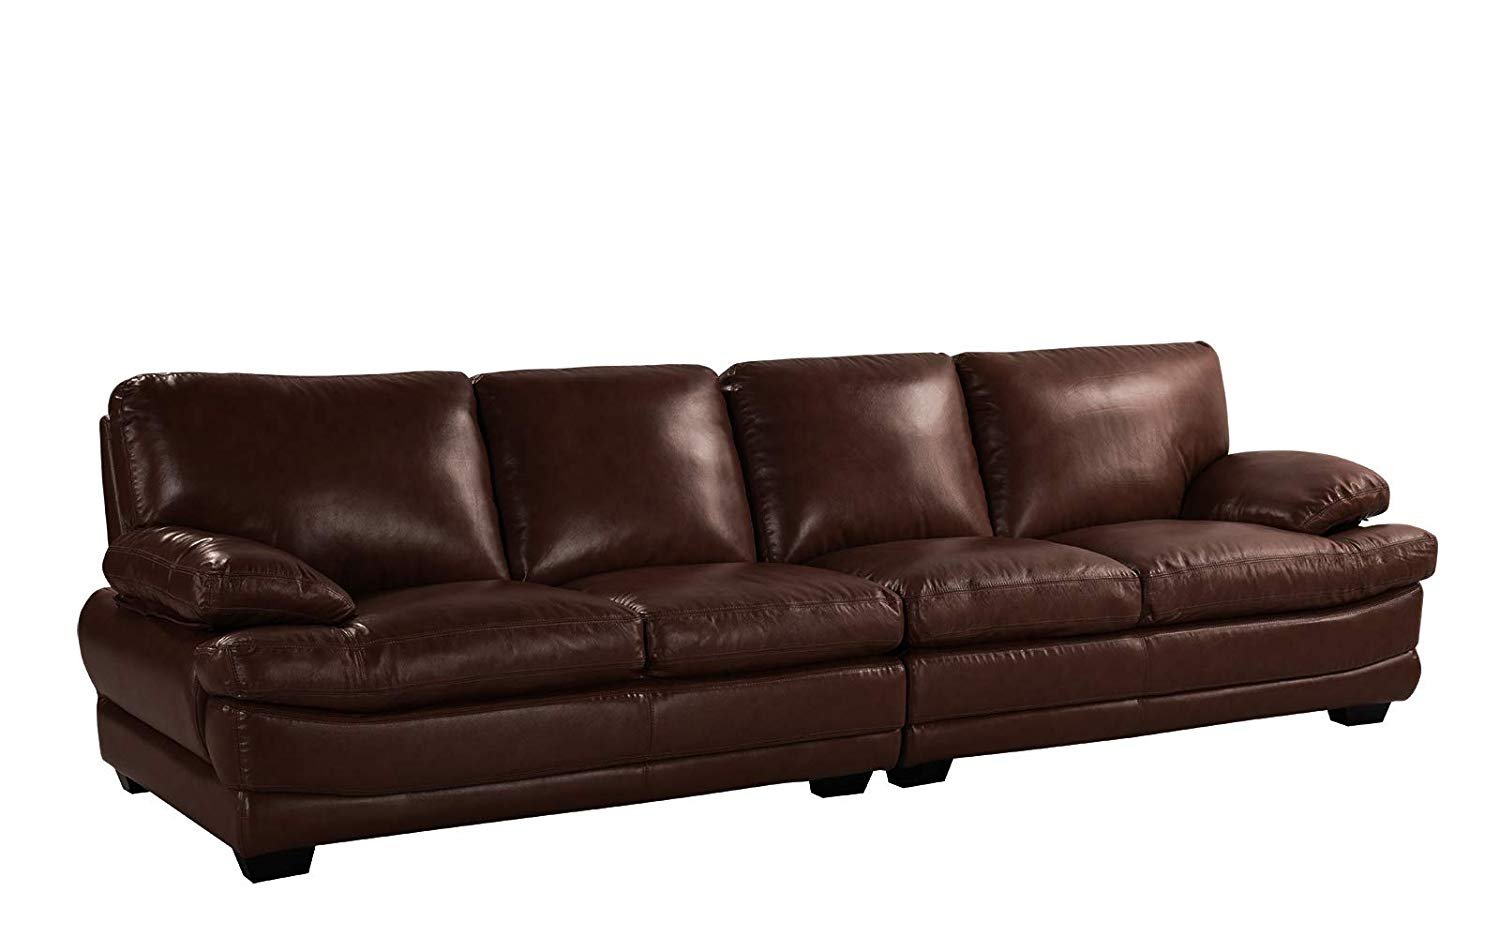 extra large 4 seater leather sofa